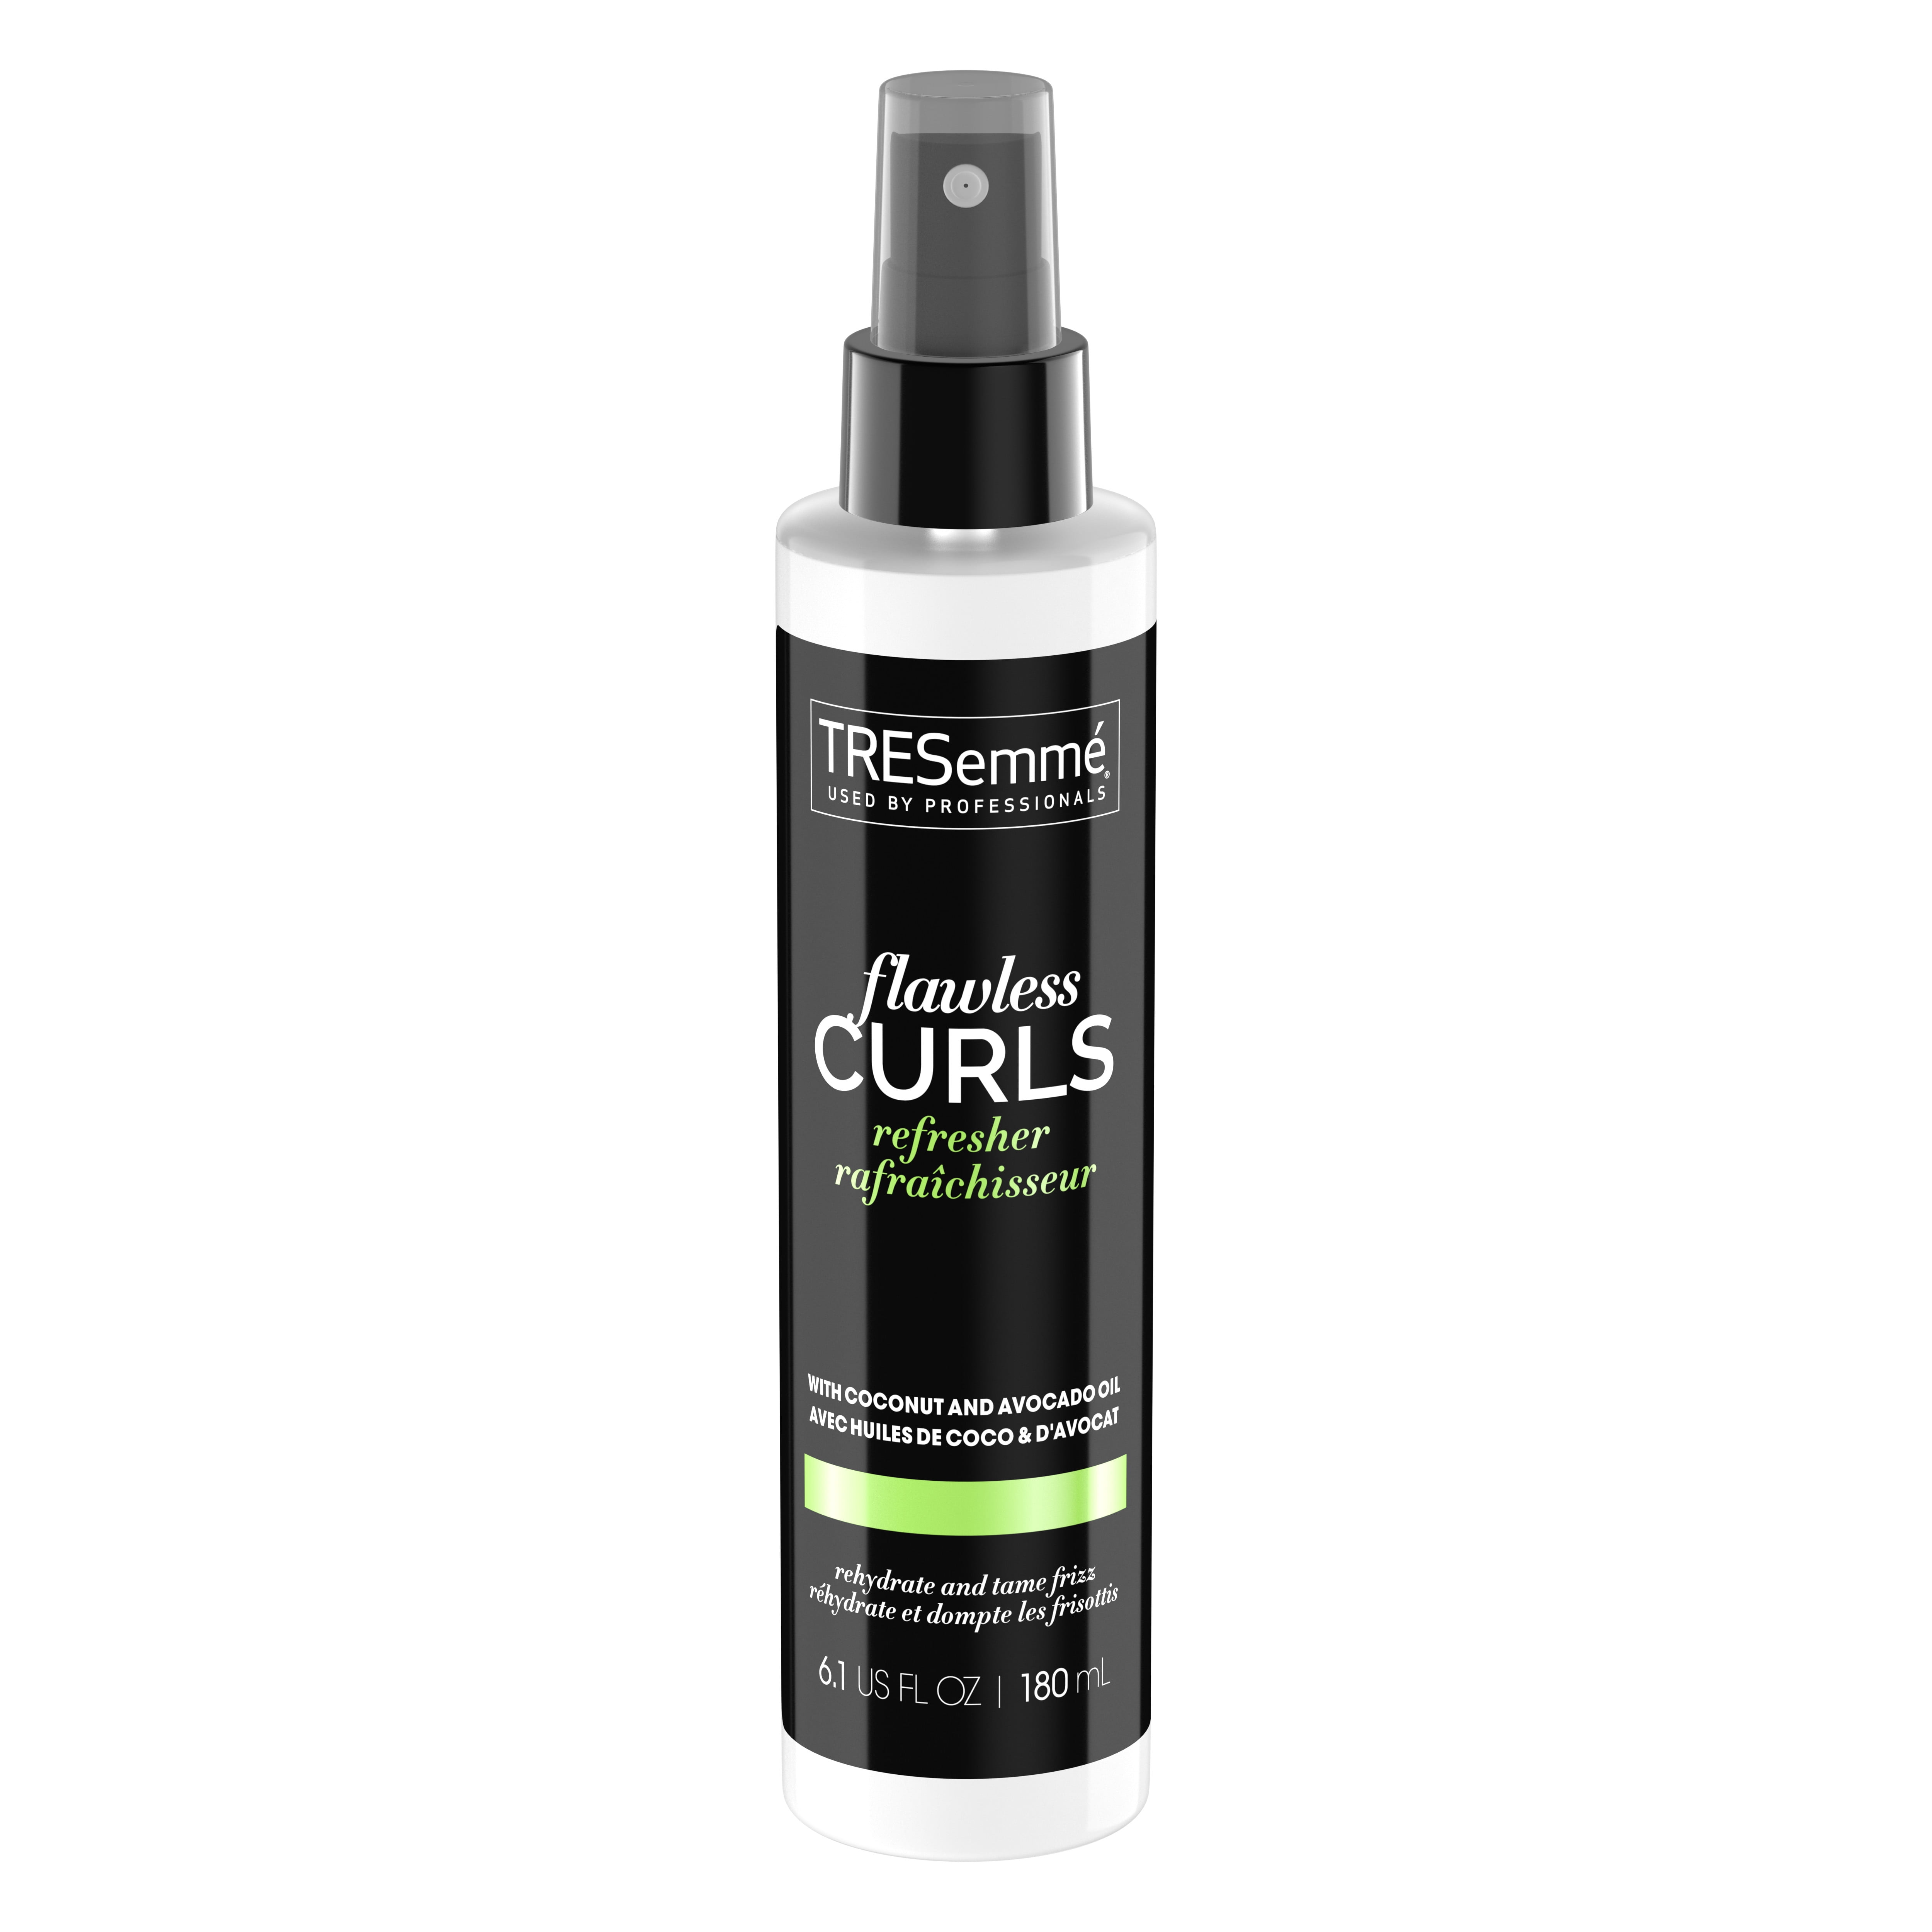 TRESemmé Flawless Curls Detangling Frizz Control Refresher Hair Spray with Coconut oil, 6.1 fl oz